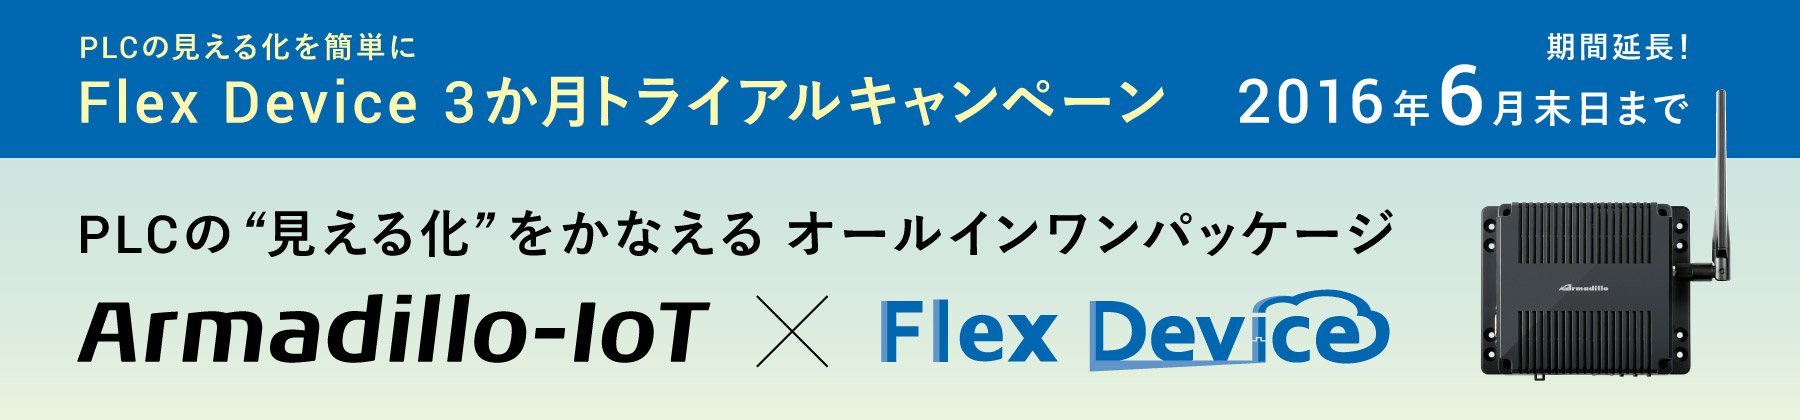 201603_flexdevice-01_1.jpg